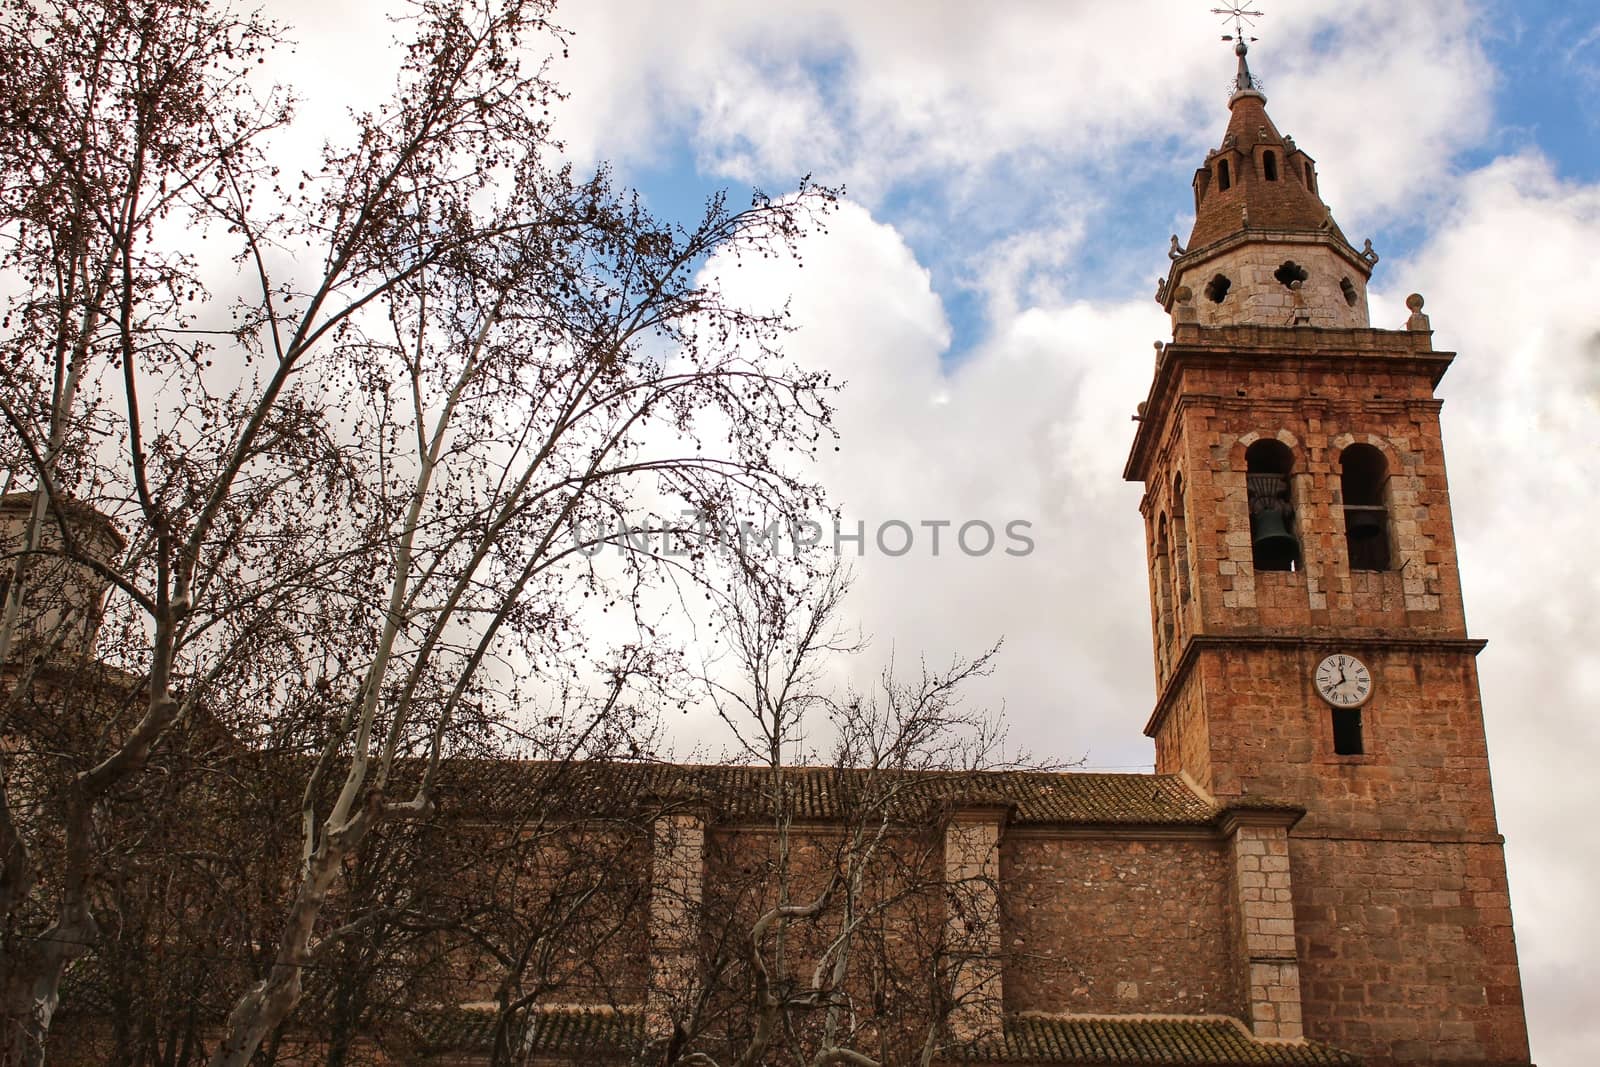 San Juan Bautista church in Casas Ibanez village, Spain. by soniabonet